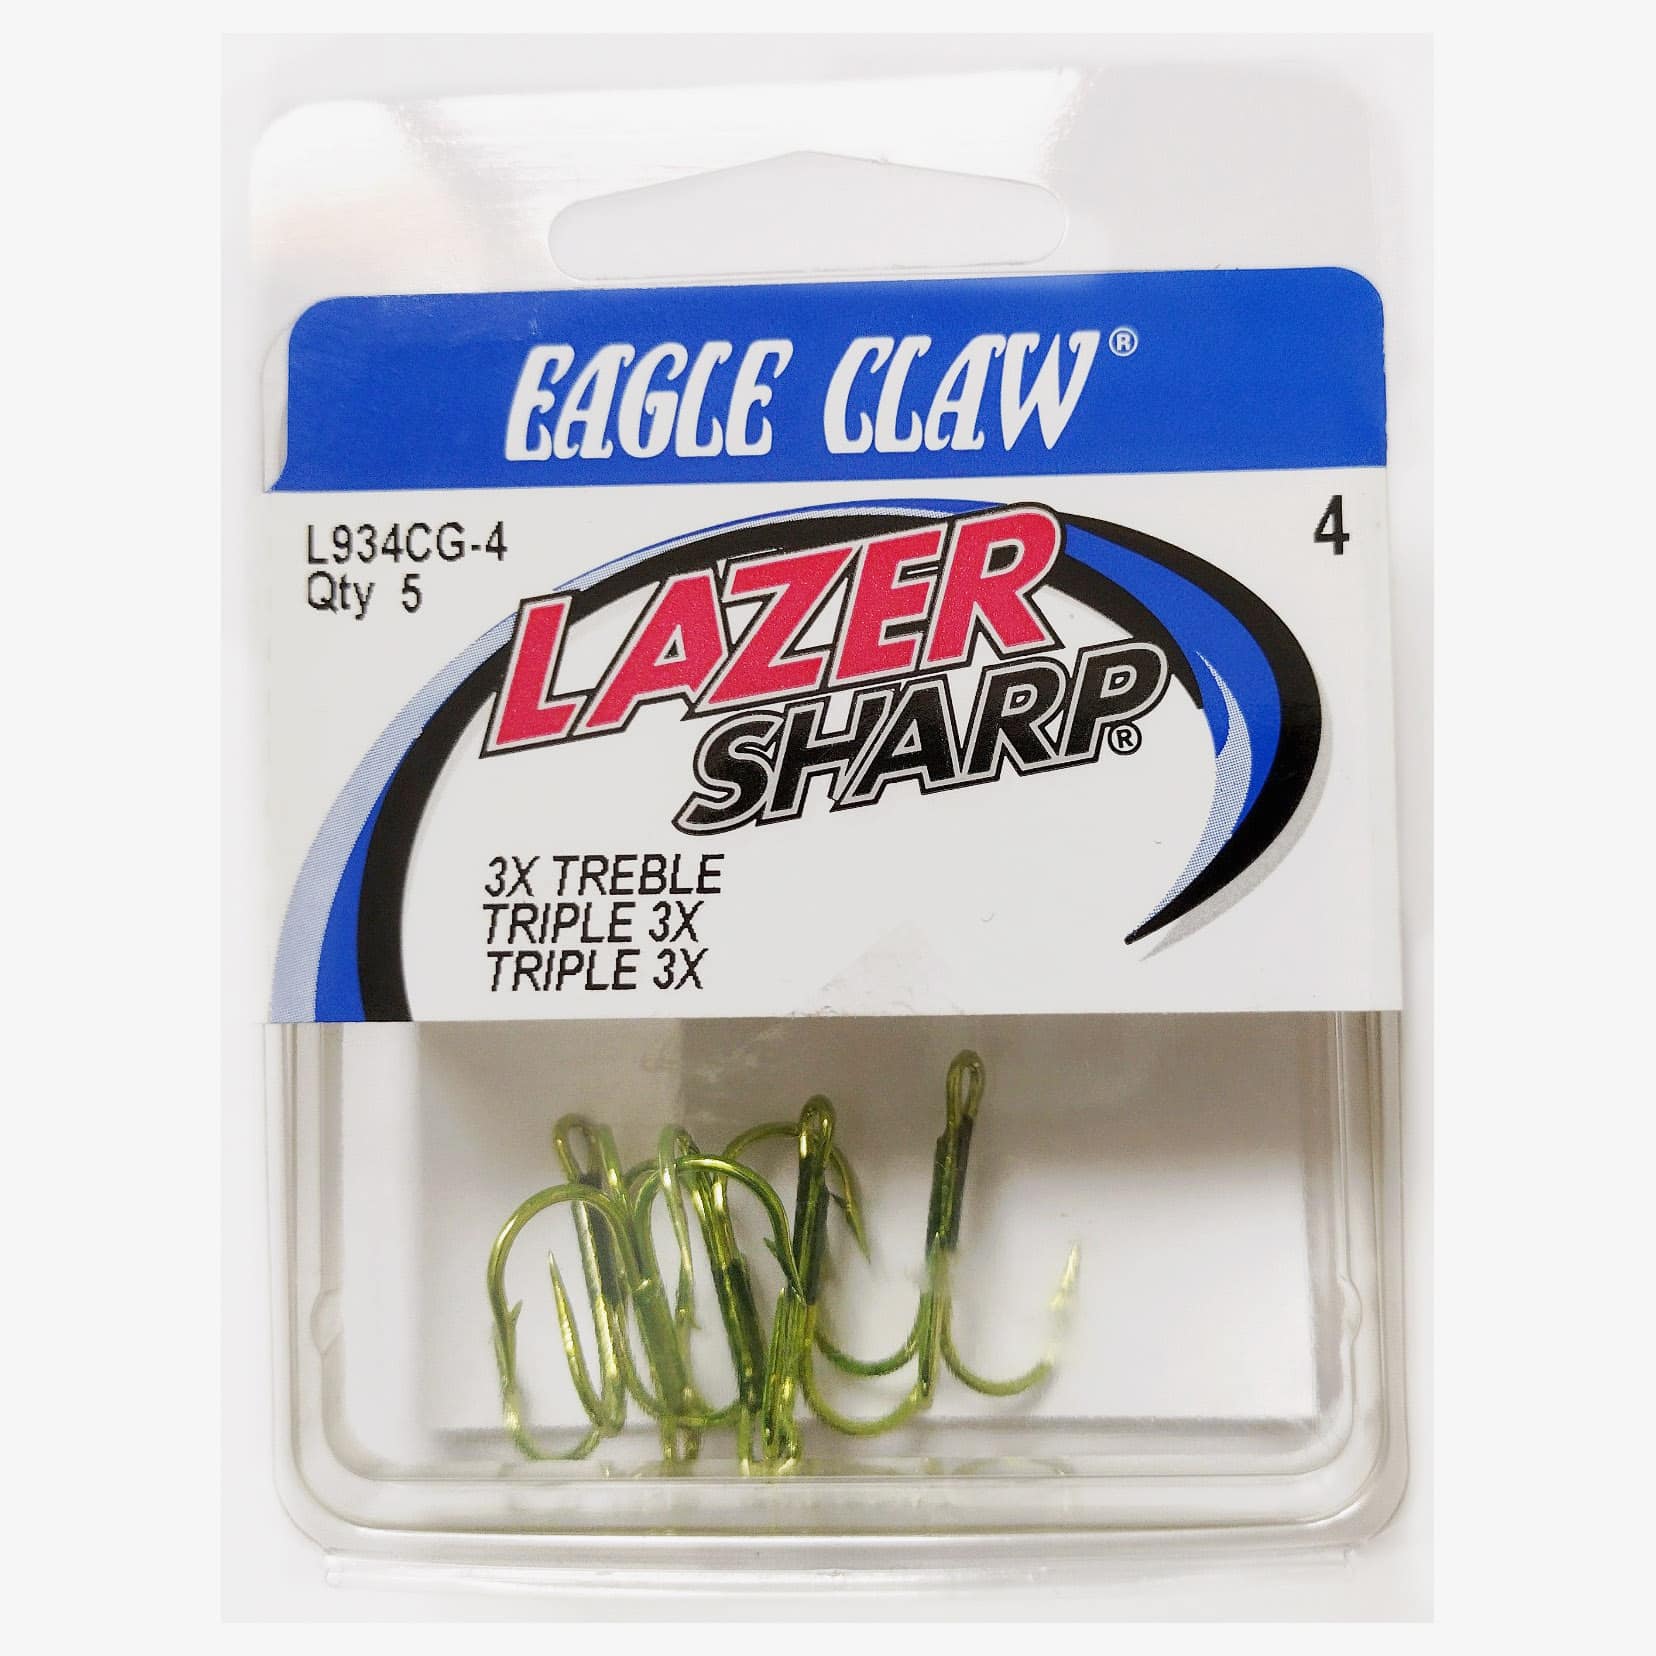 *CLOSEOUT* EAGLE CLAW GREEN LAZER SHARP TREBLE HOOKS - SIZE 4